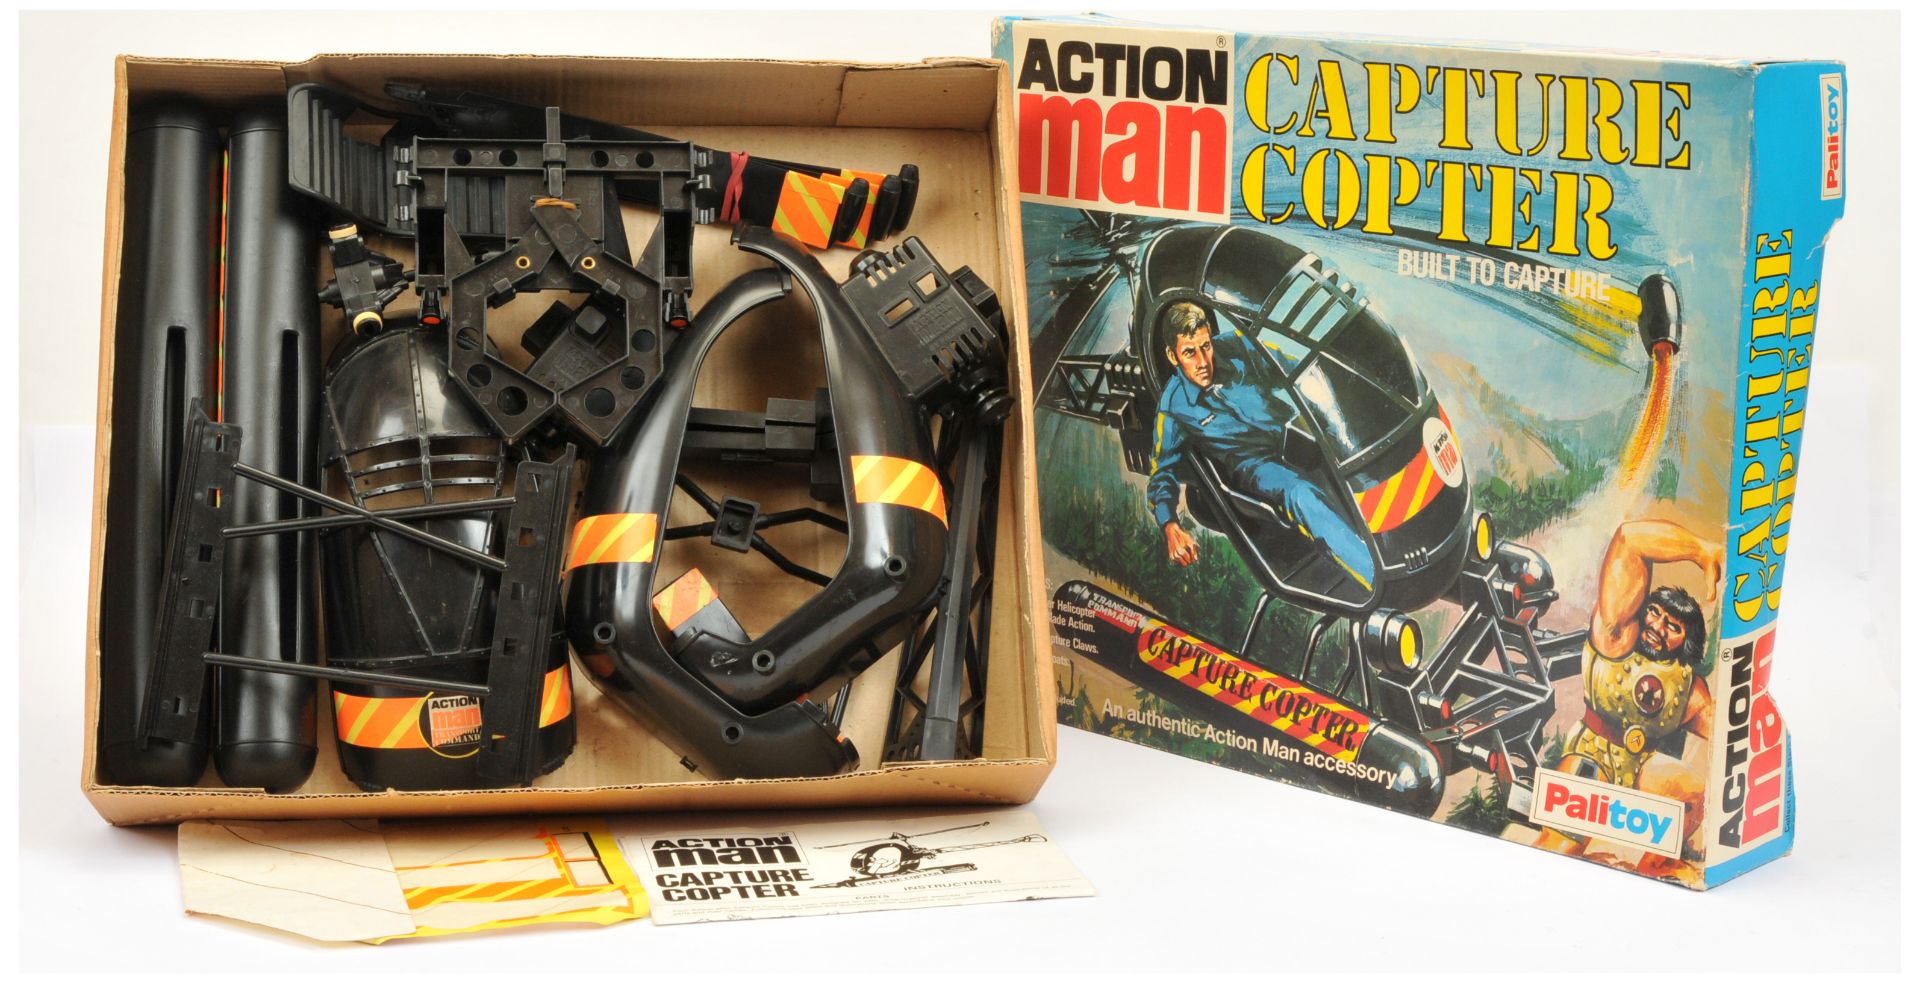 Palitoy Action Man Vintage 34731 Capture Copter "Built to Capture" - black snap together plastic ...